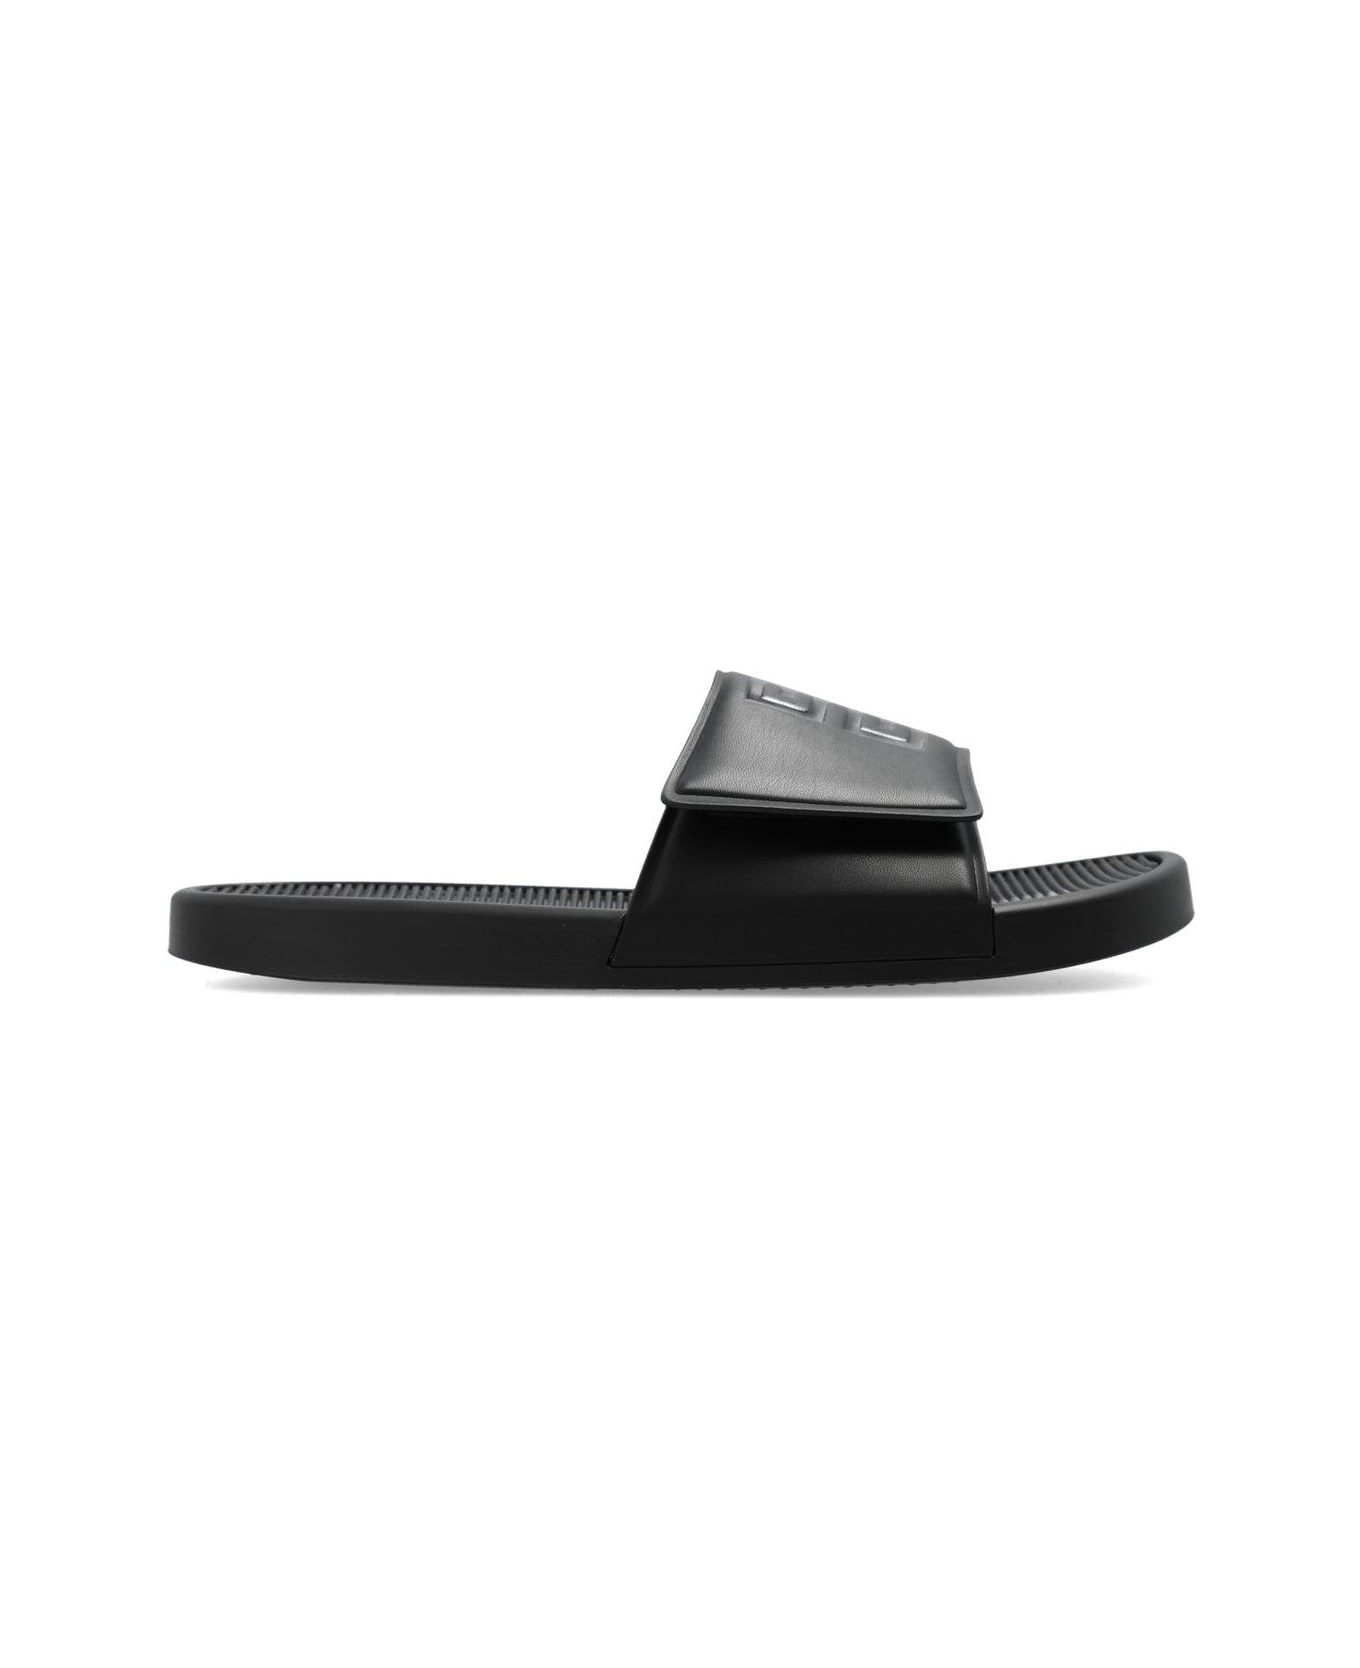 Givenchy 4g Emblem Flat Sandals - Black/white